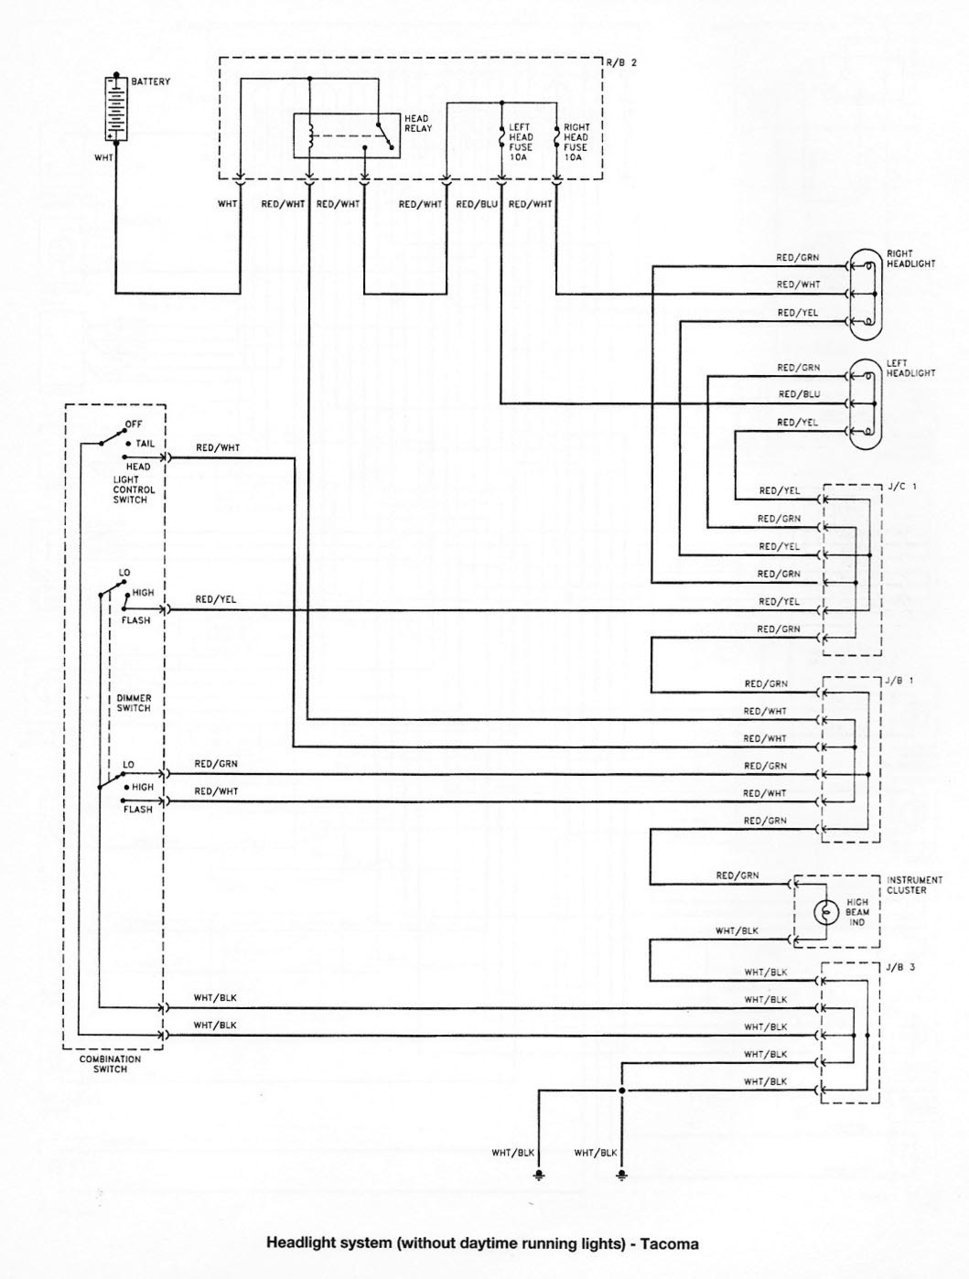 Tacoma 1995 electrical diagram Headlight system.jpg